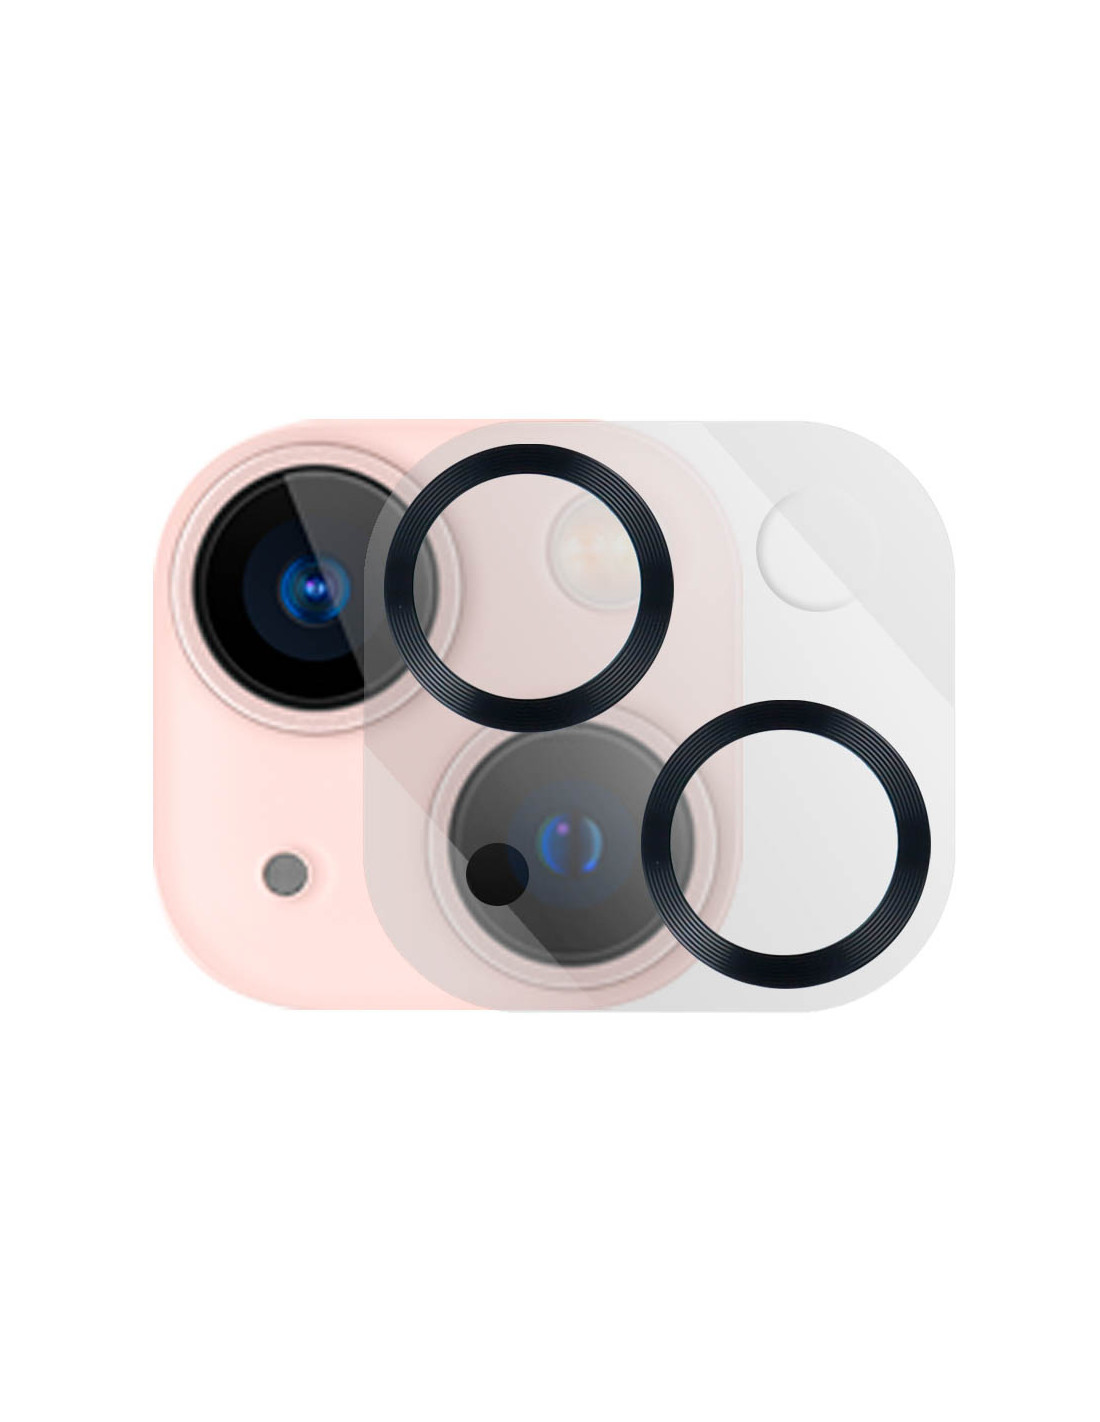 Mica De Cristal Templado Camara Para iPhone 13 Pro Max O 13